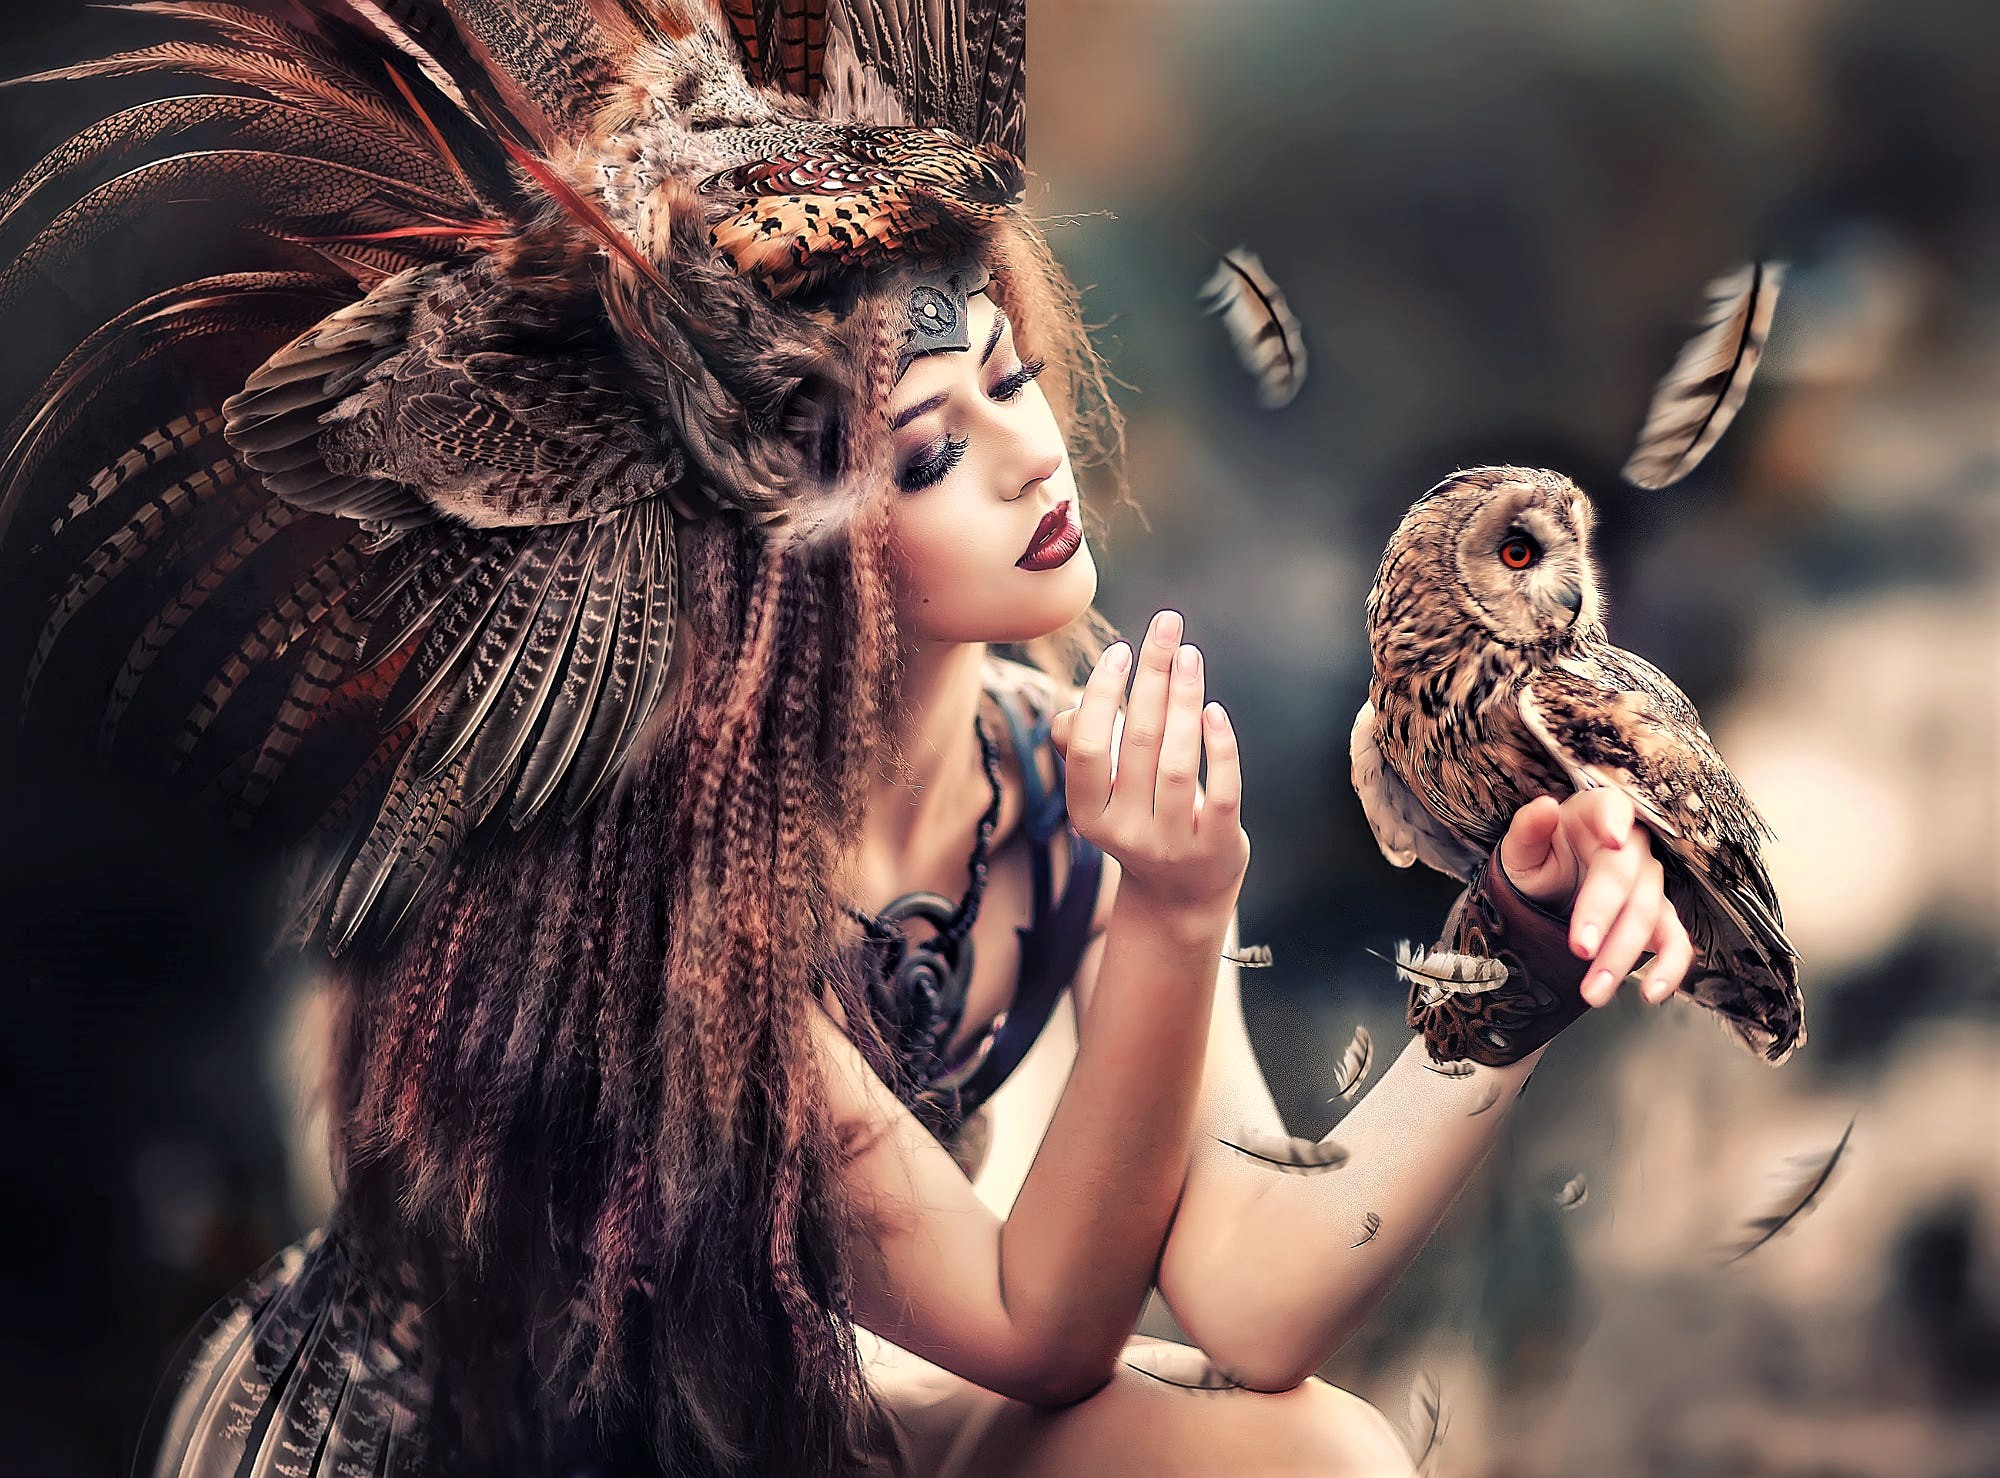 Girl with Owl and Feathers by Irina Nedyalkova